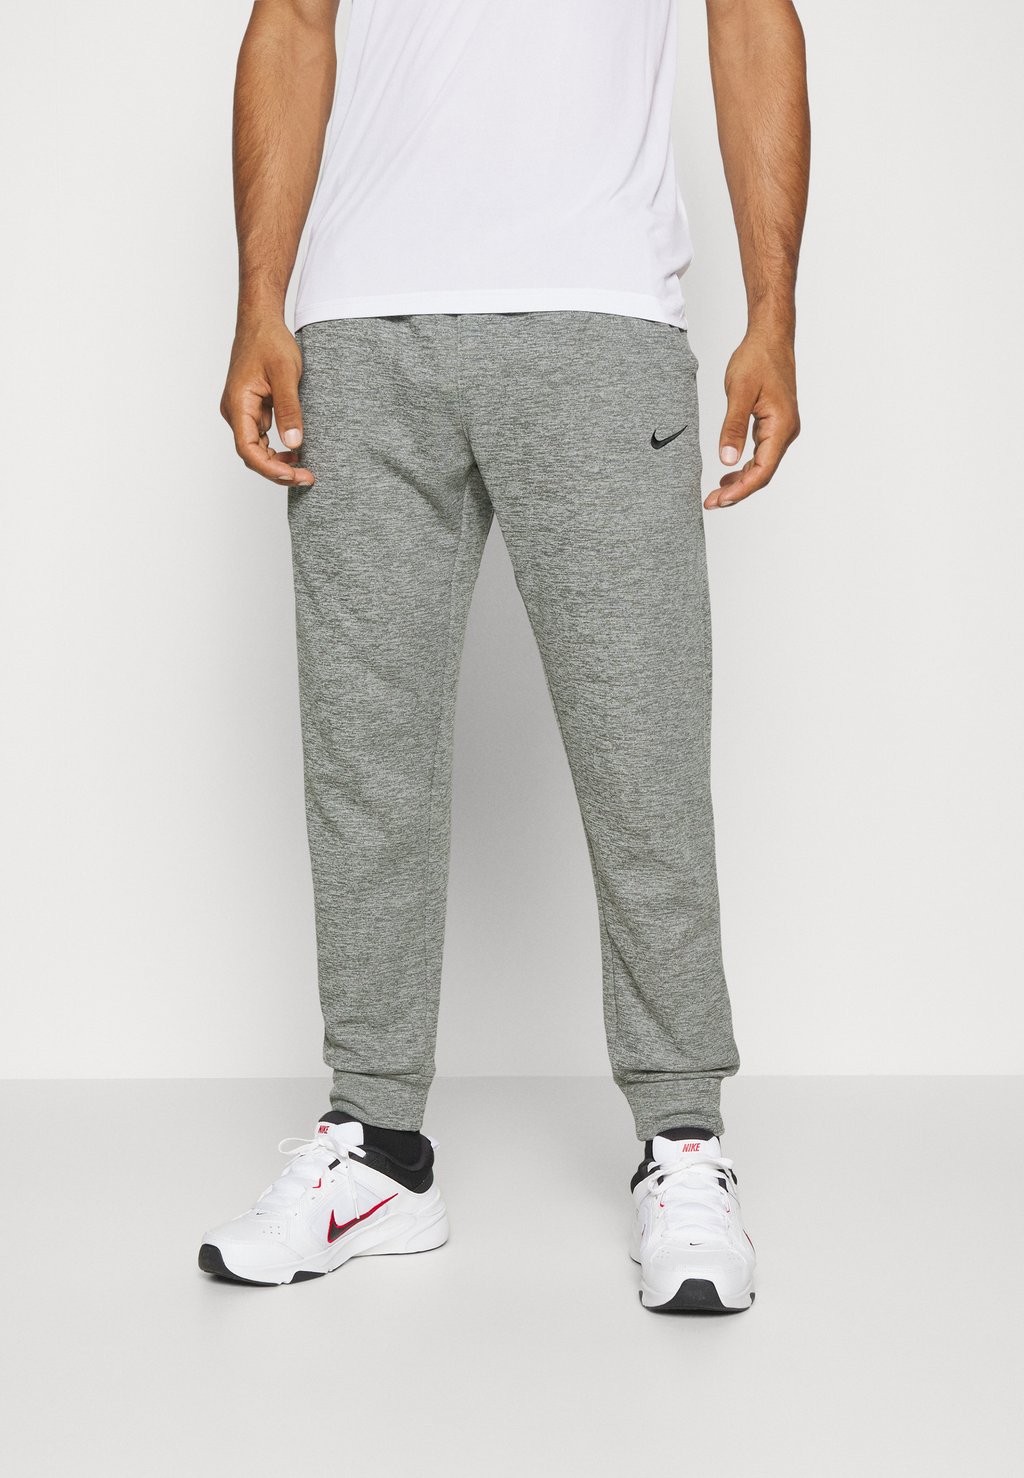 Спортивные брюки PANT TAPER Nike, темно-серый вереск/серый/черный спортивные брюки pant taper nike черный белый